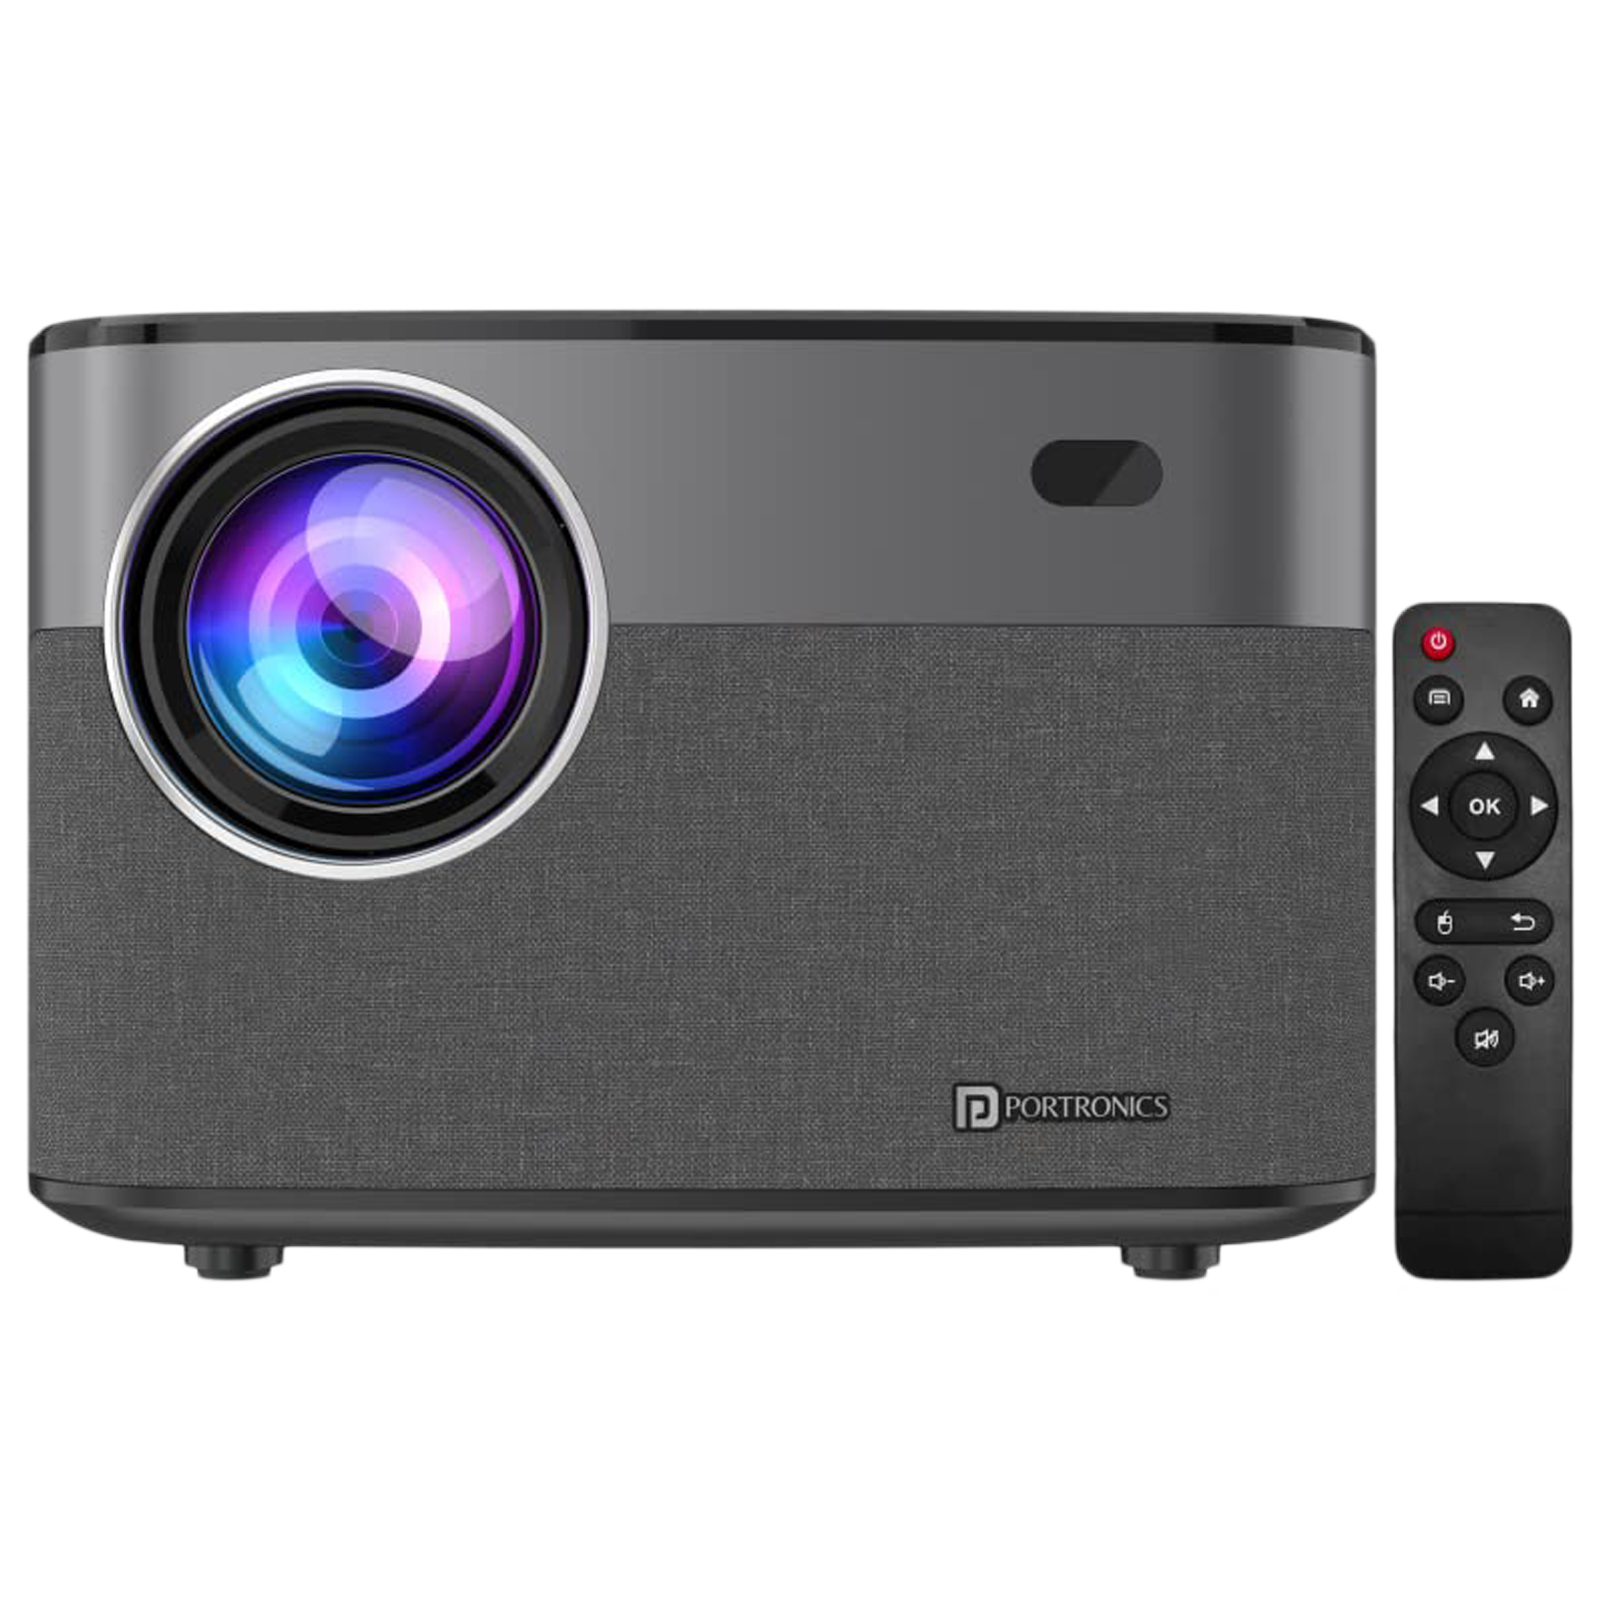 PORTRONICS Beem 300 Full HD LED Projector (300 Lumens, HDMI + USB, Hi-Fi Sound, POR 282, Black)